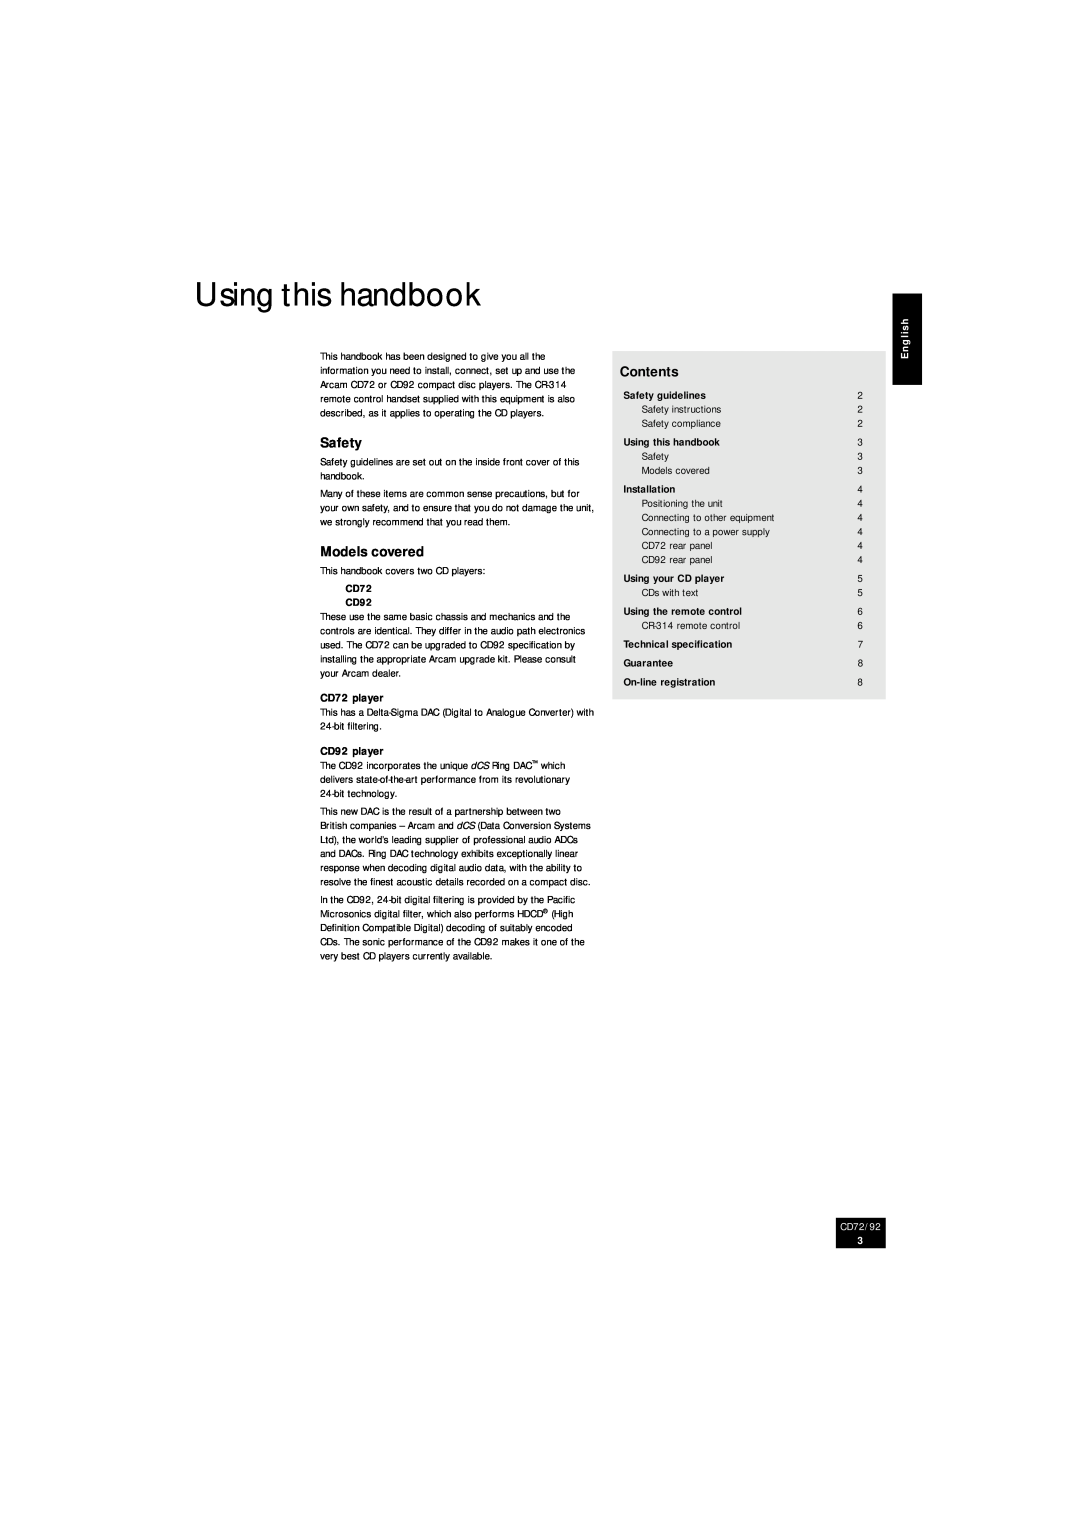 Arcam CD92 manual Using this handbook, Safety, Models covered, Contents, CD72/92, English 